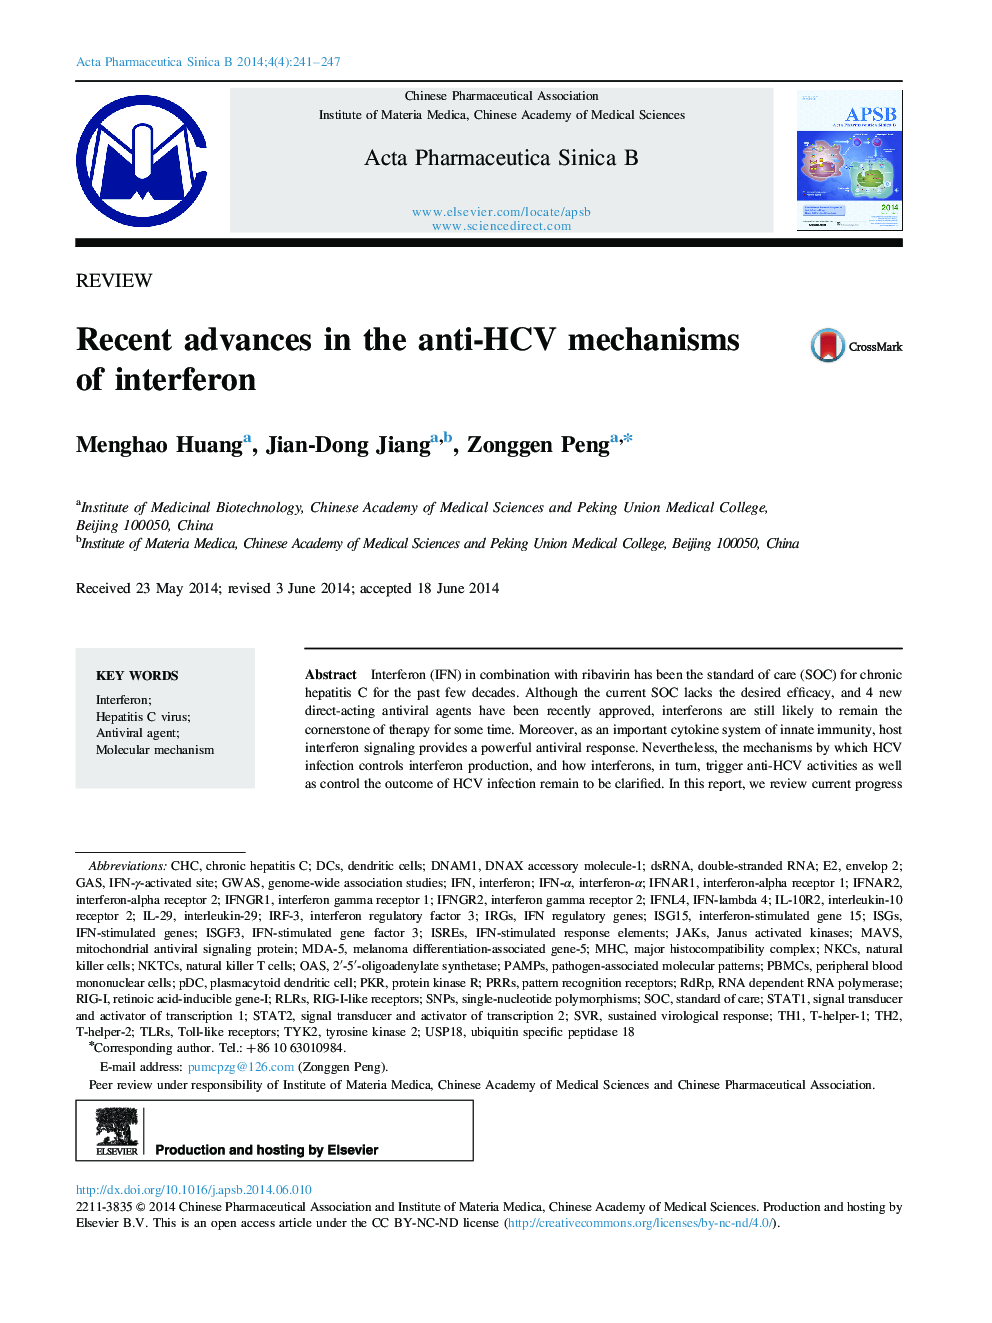 Recent advances in the anti-HCV mechanisms of interferon 